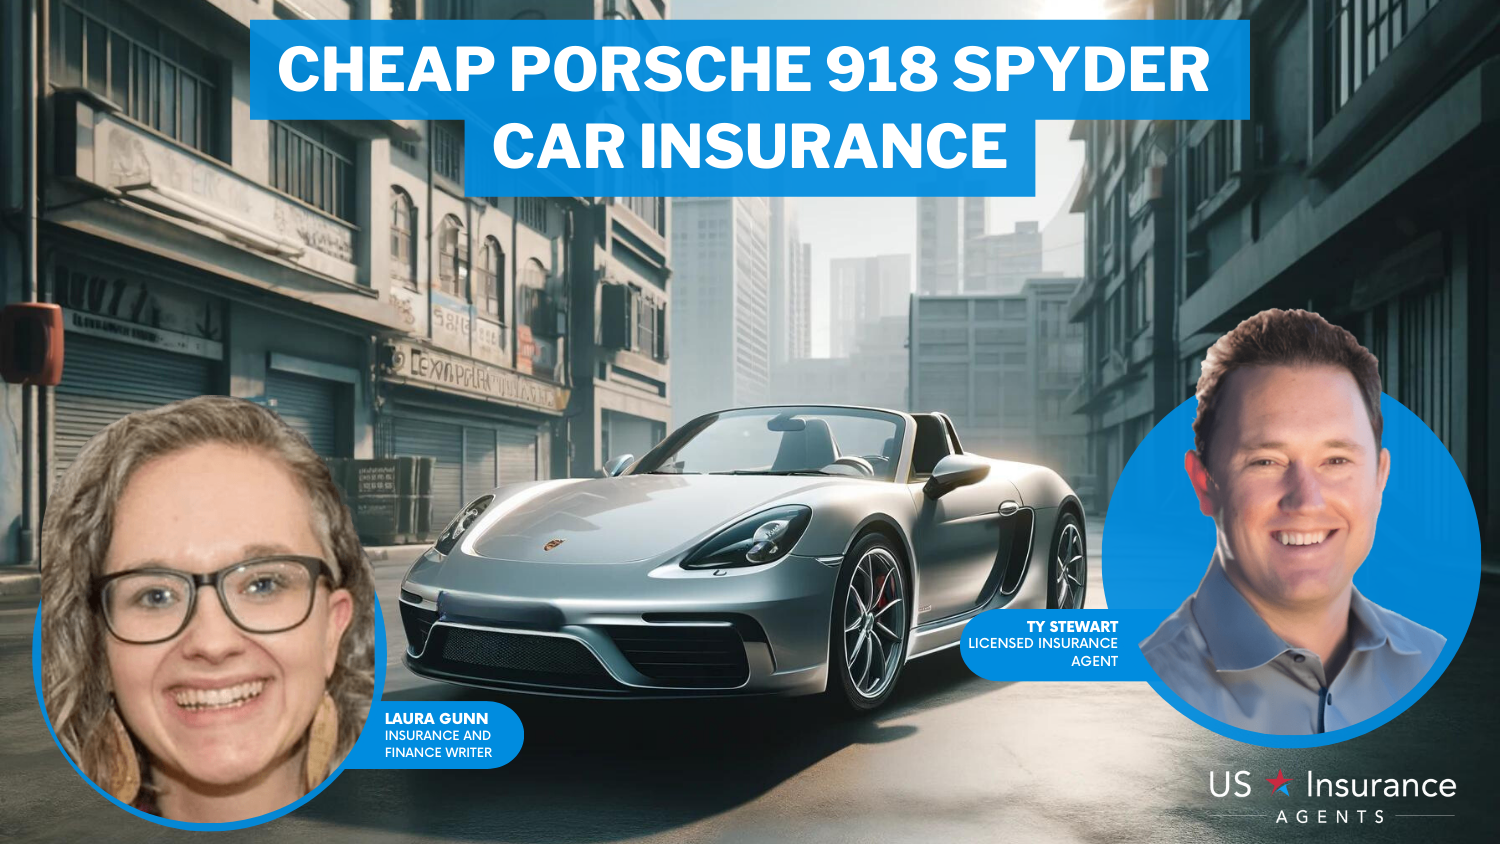 State Farm: Cheap Porsche 918 Spyder car insurance, auto insurance